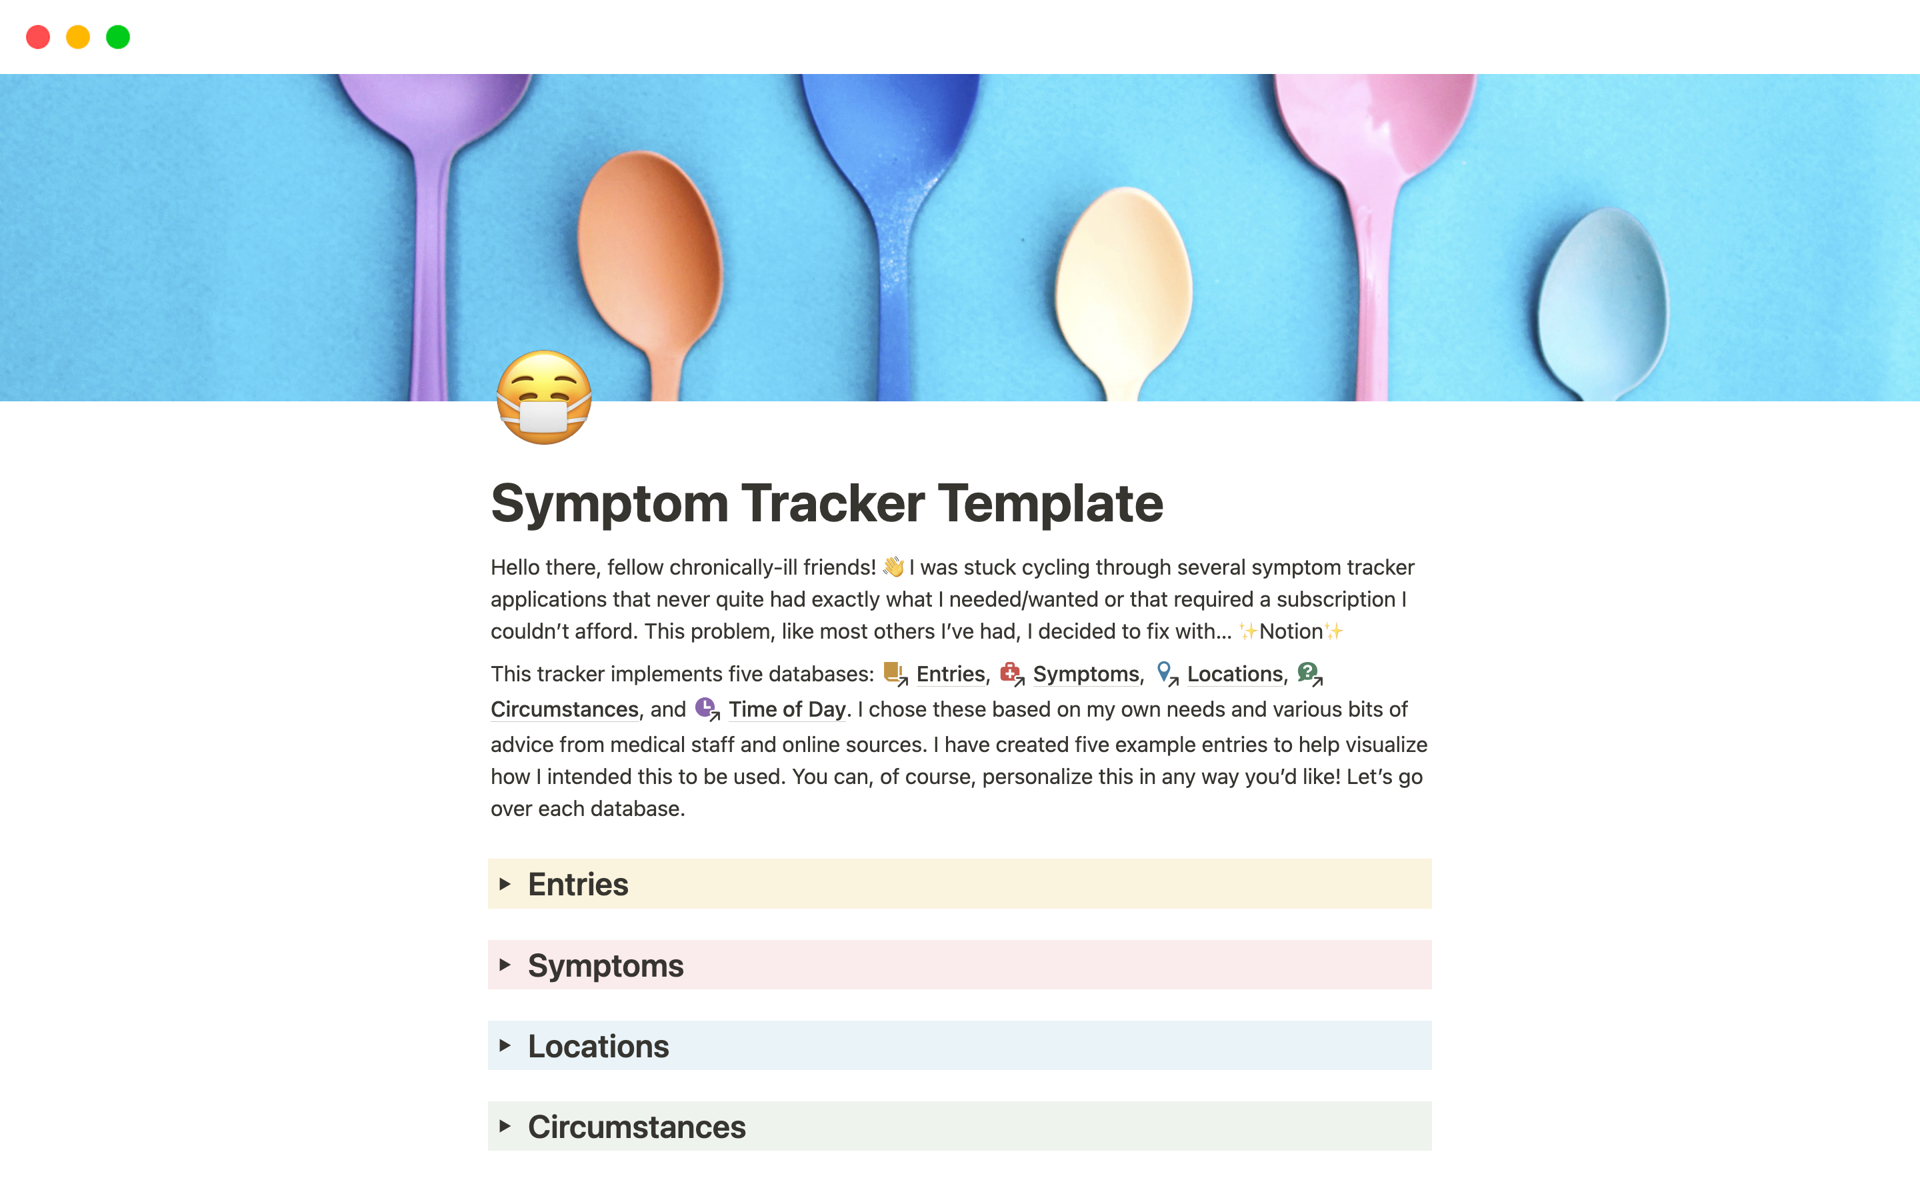 Vista previa de una plantilla para Symptom Tracker